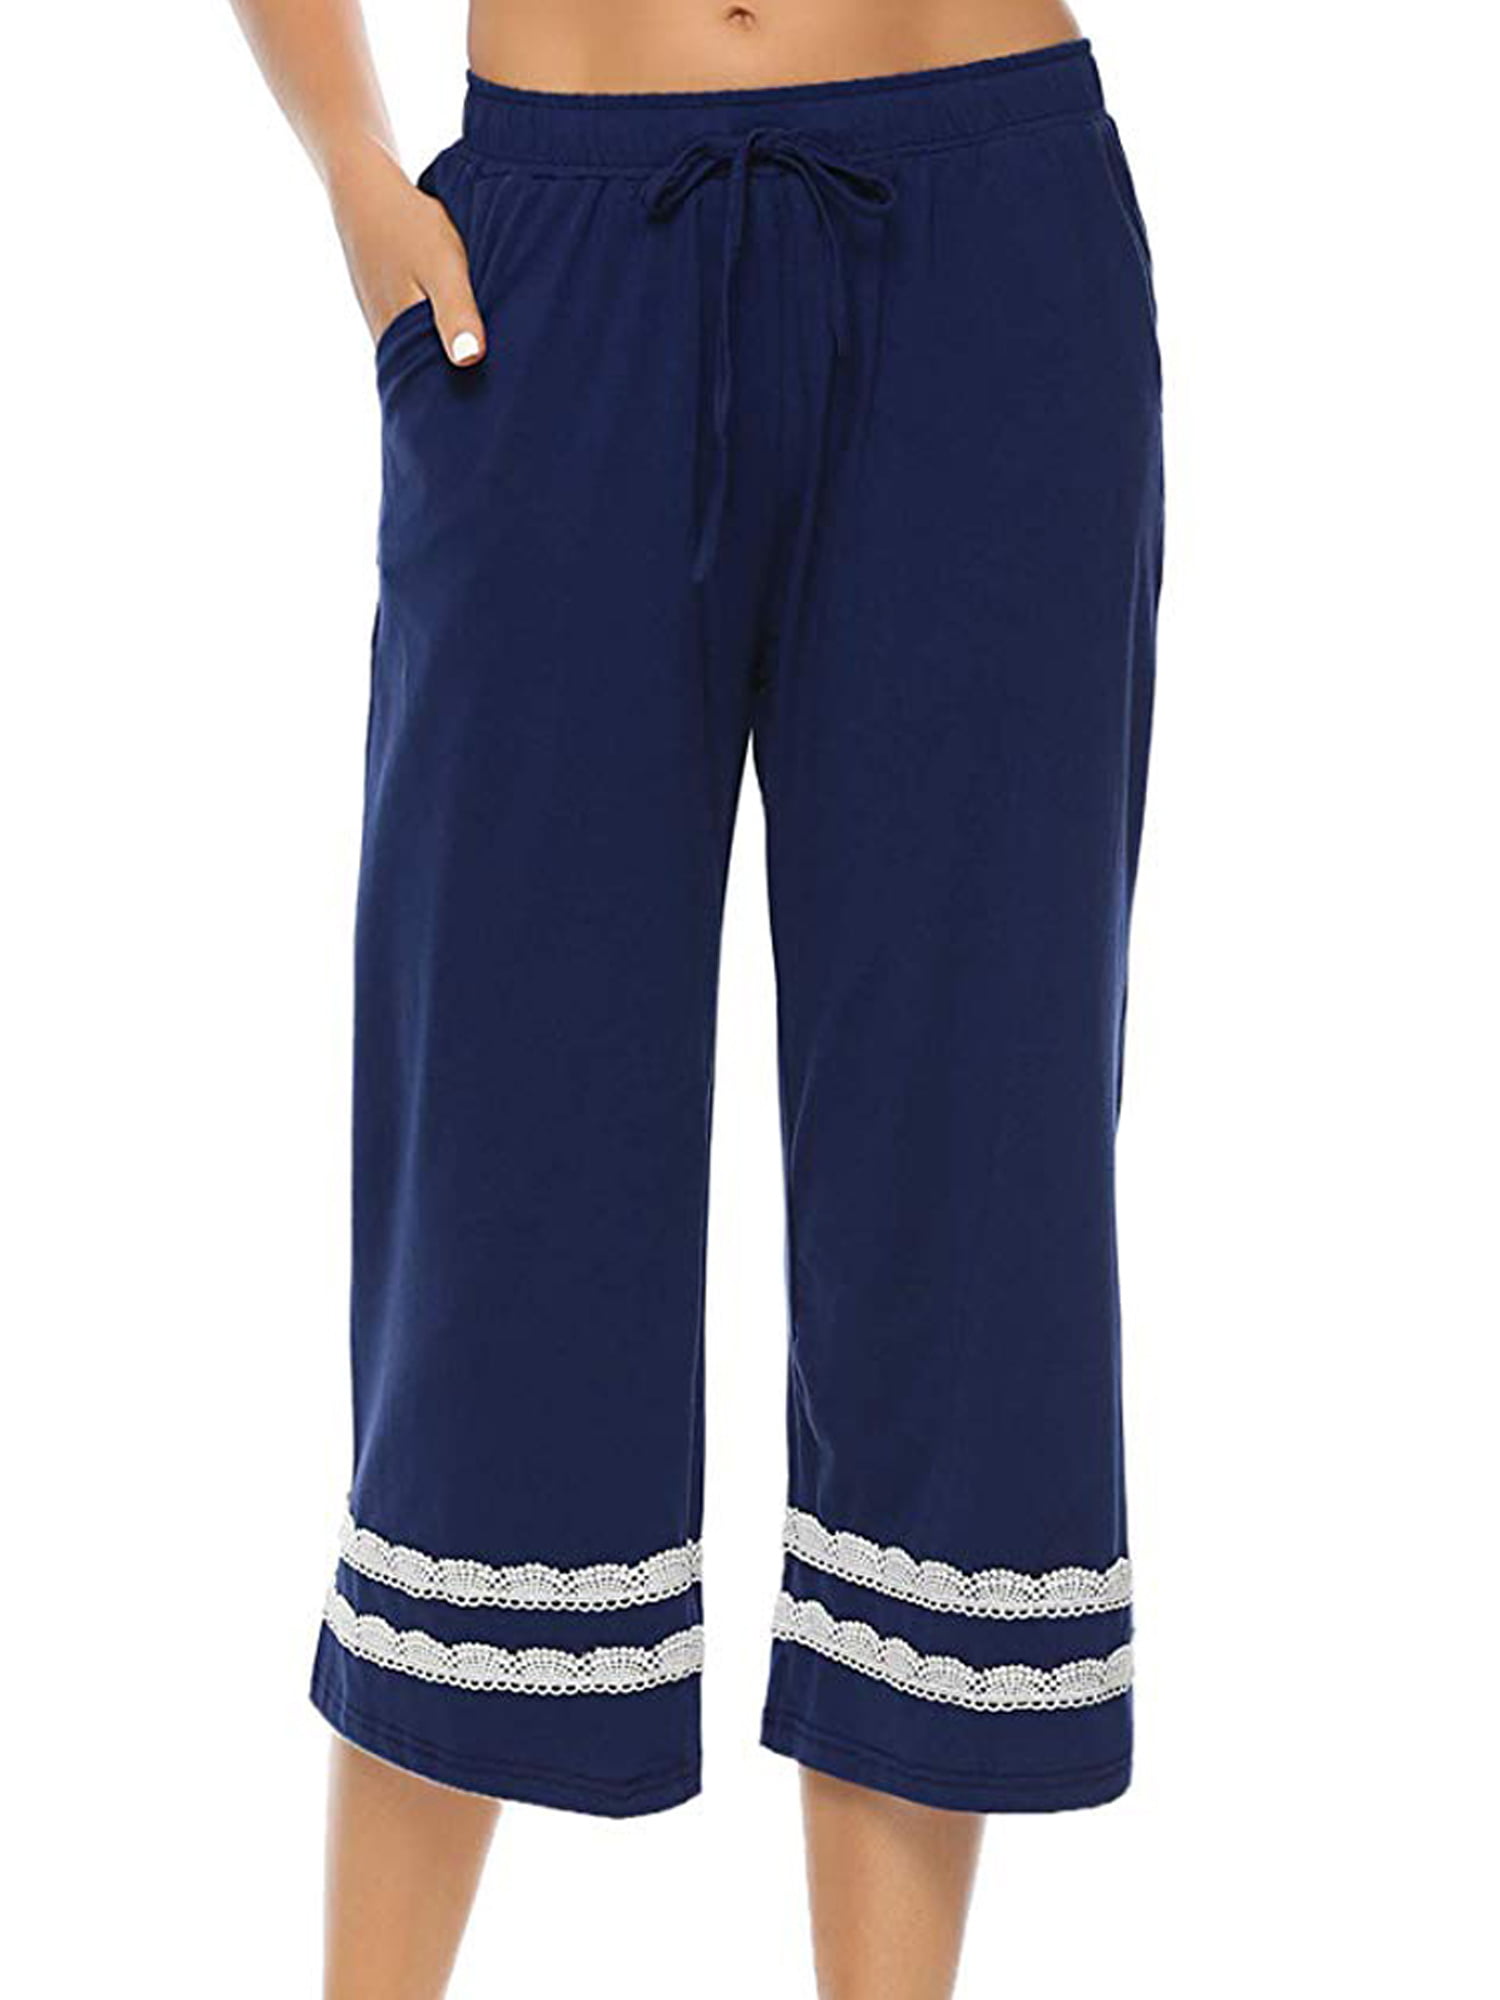 VIPEX Womens Pajama Pants Casual Madal Lounge Pants Yoga Pants Sleepwear Pants for Women 